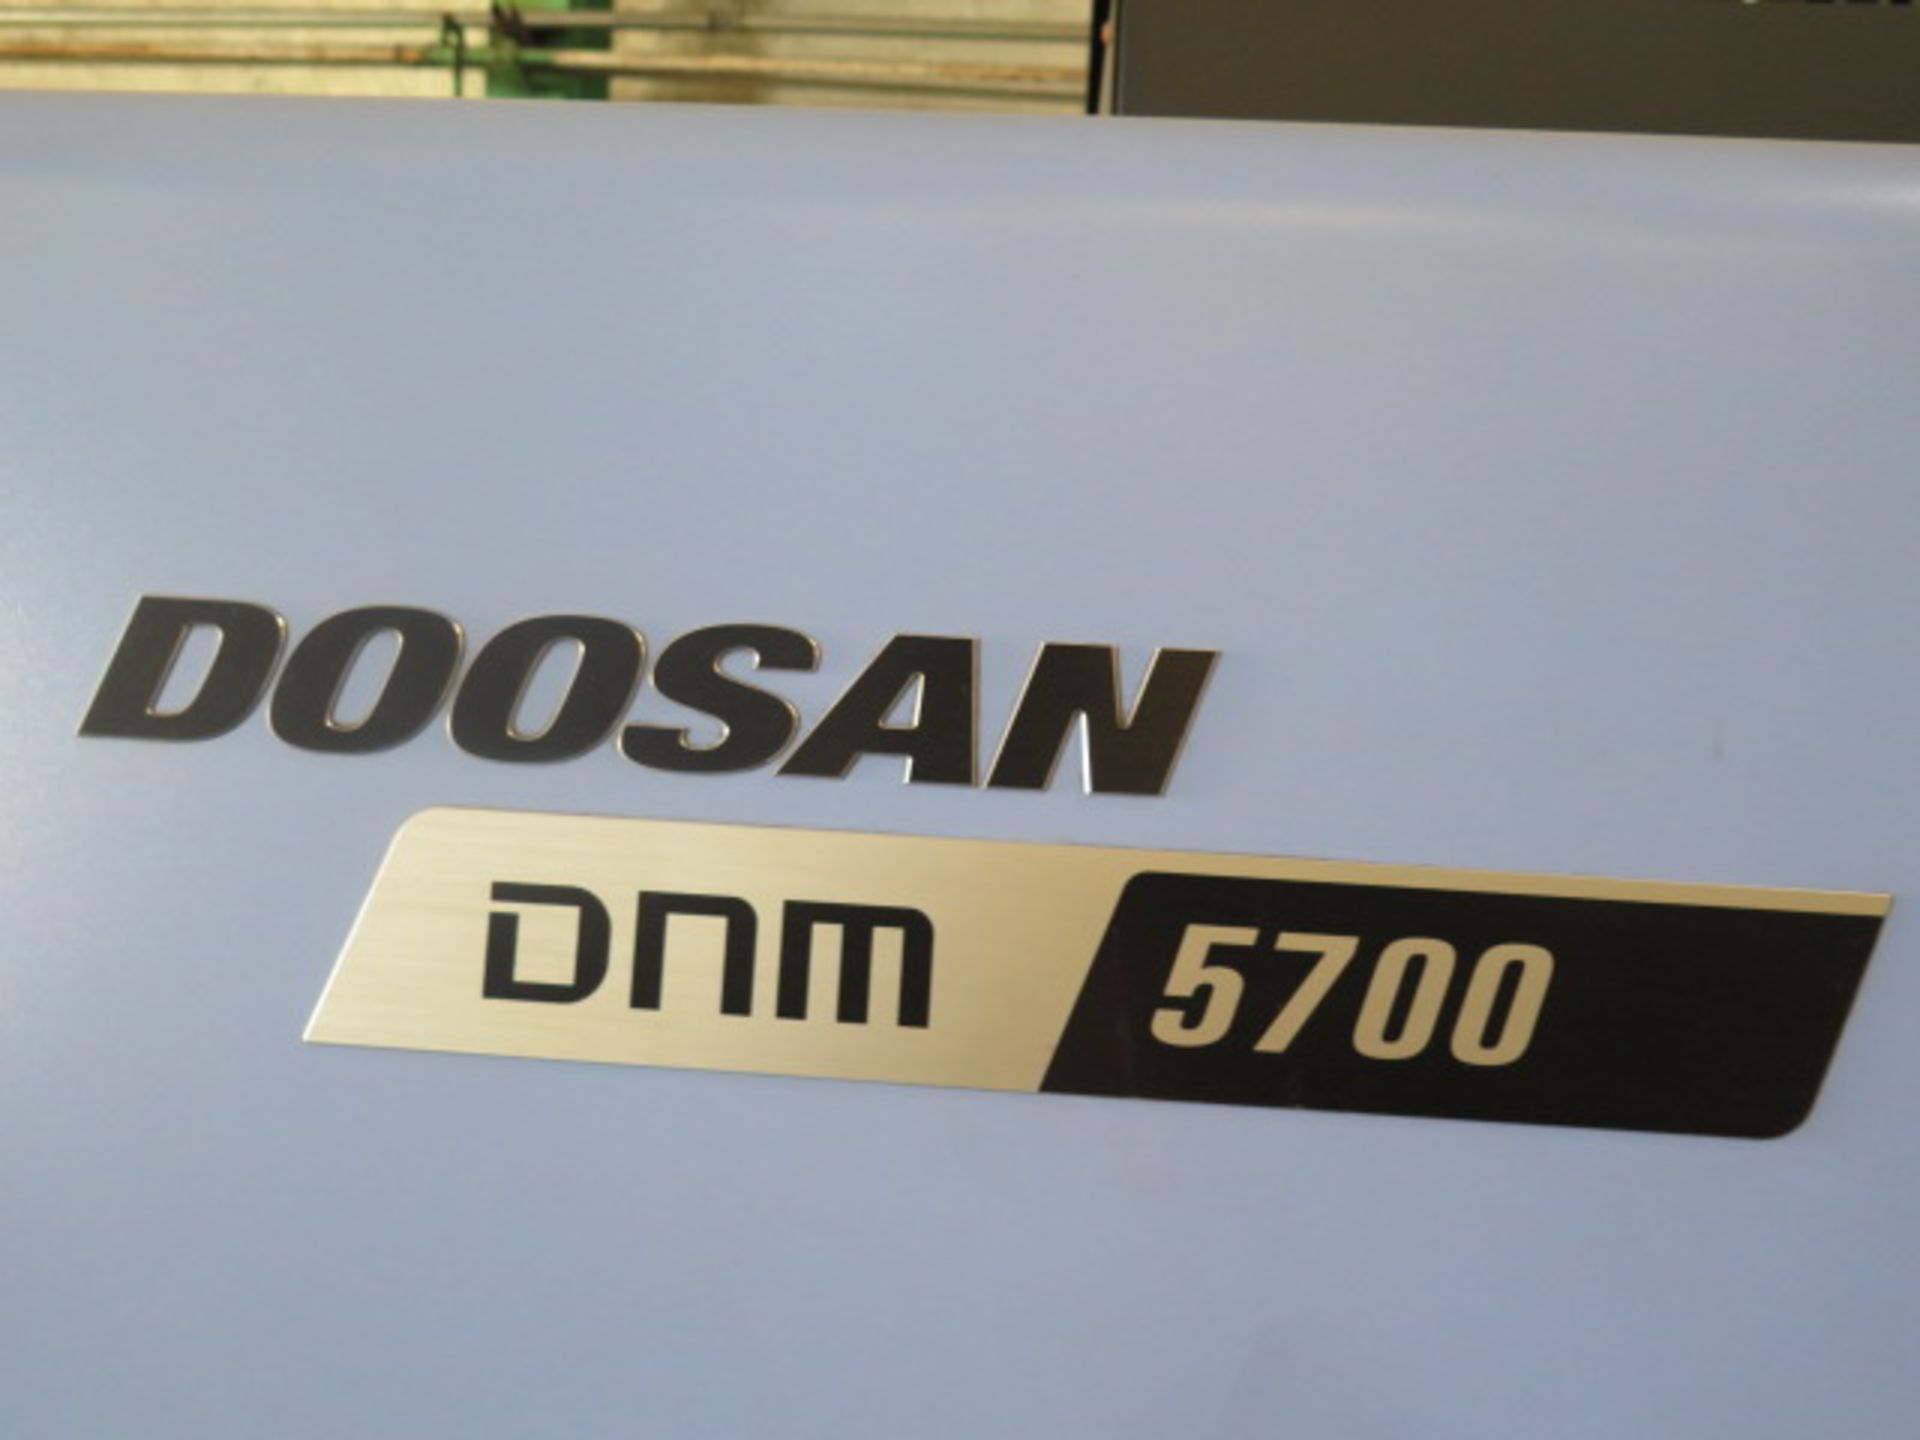 2017 Doosan DNM 5700 CNC VMC s/n MV0091-009700 w/ Doosan-Fanuc I Series Contron, SOLD AS IS - Image 19 of 21